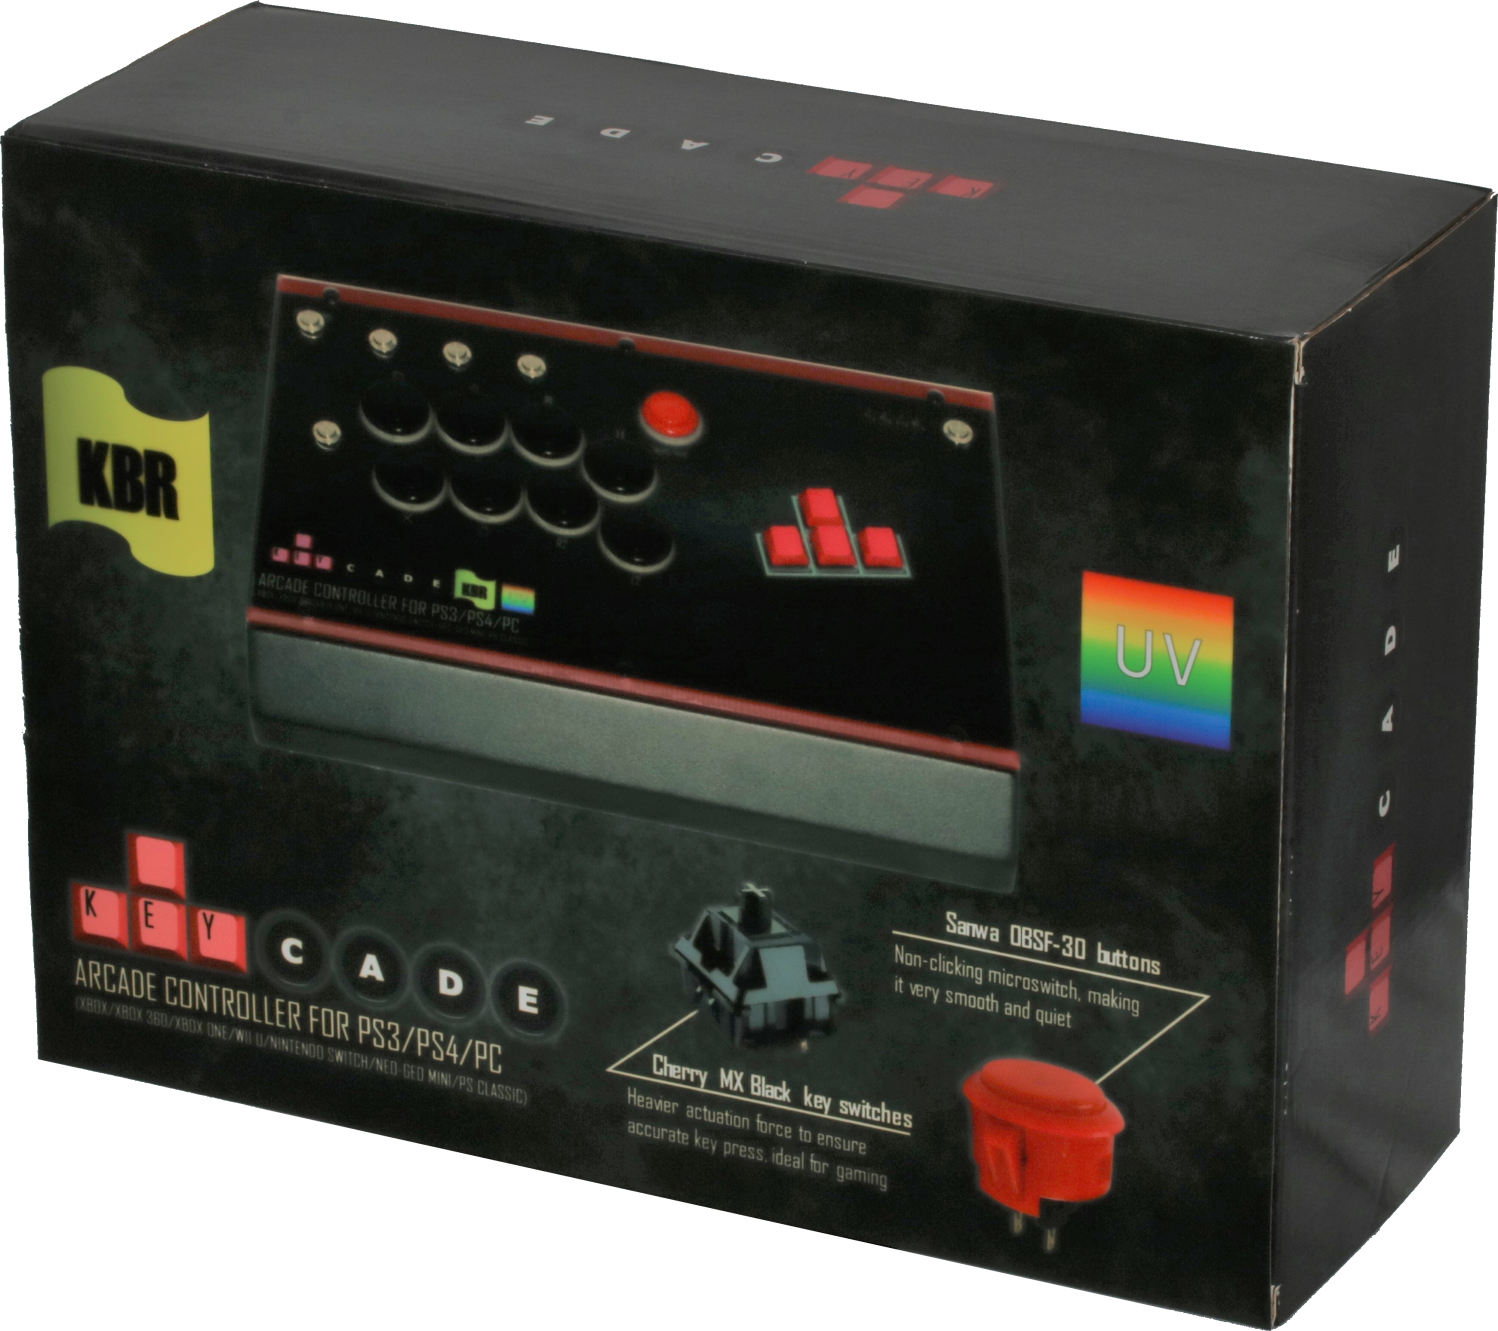 KeyCade KBR UVP arcade controller